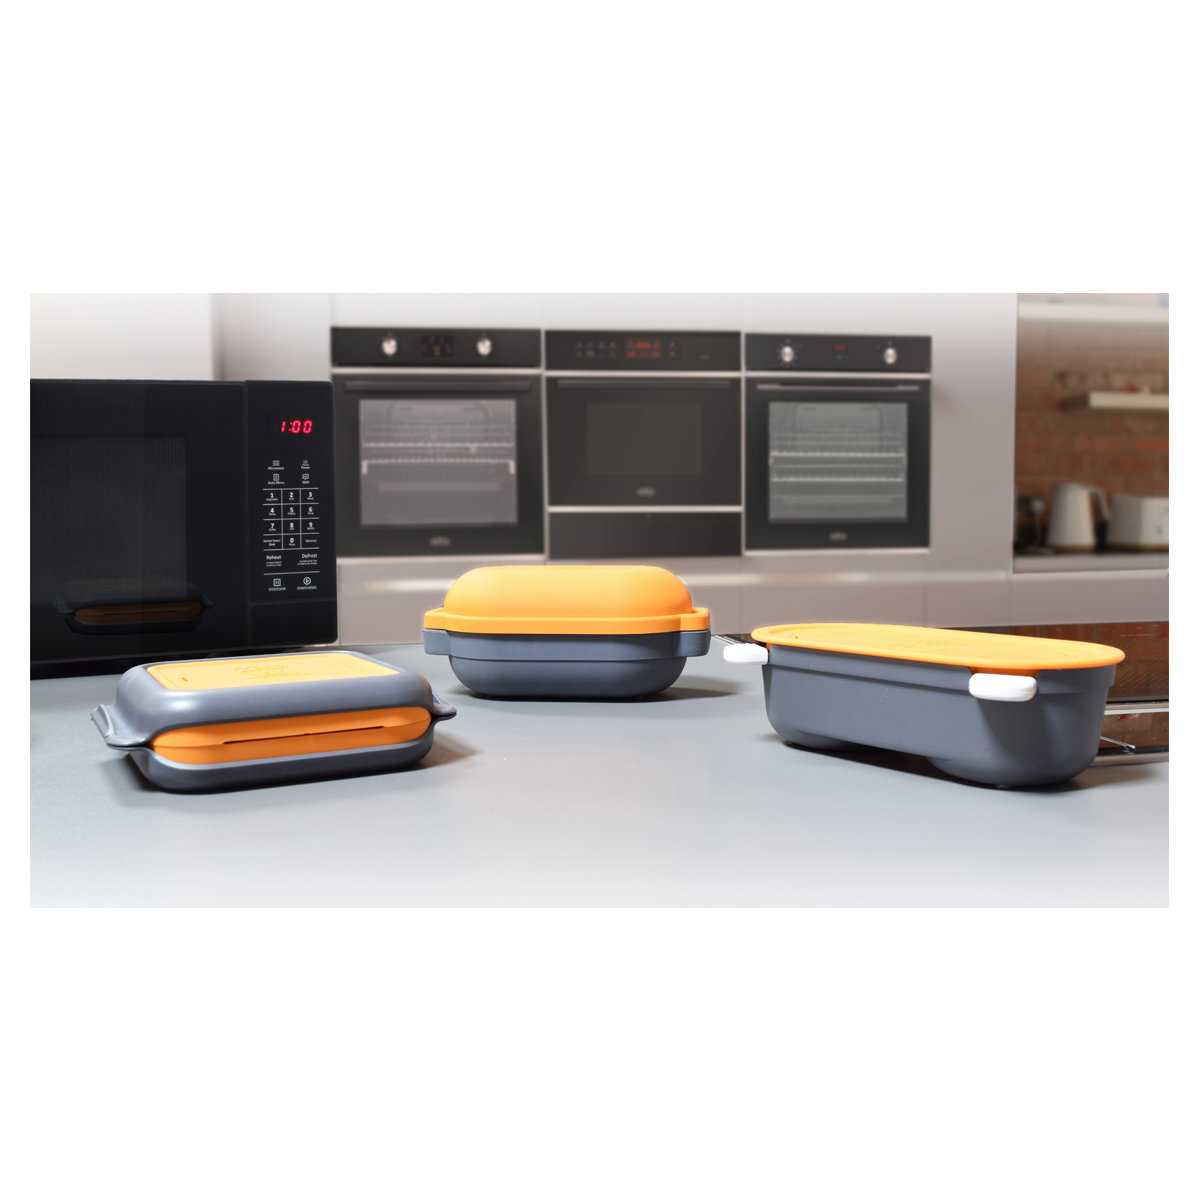 Morphy Richards 511647511648511649 MICO Microwaveable Cooker Set